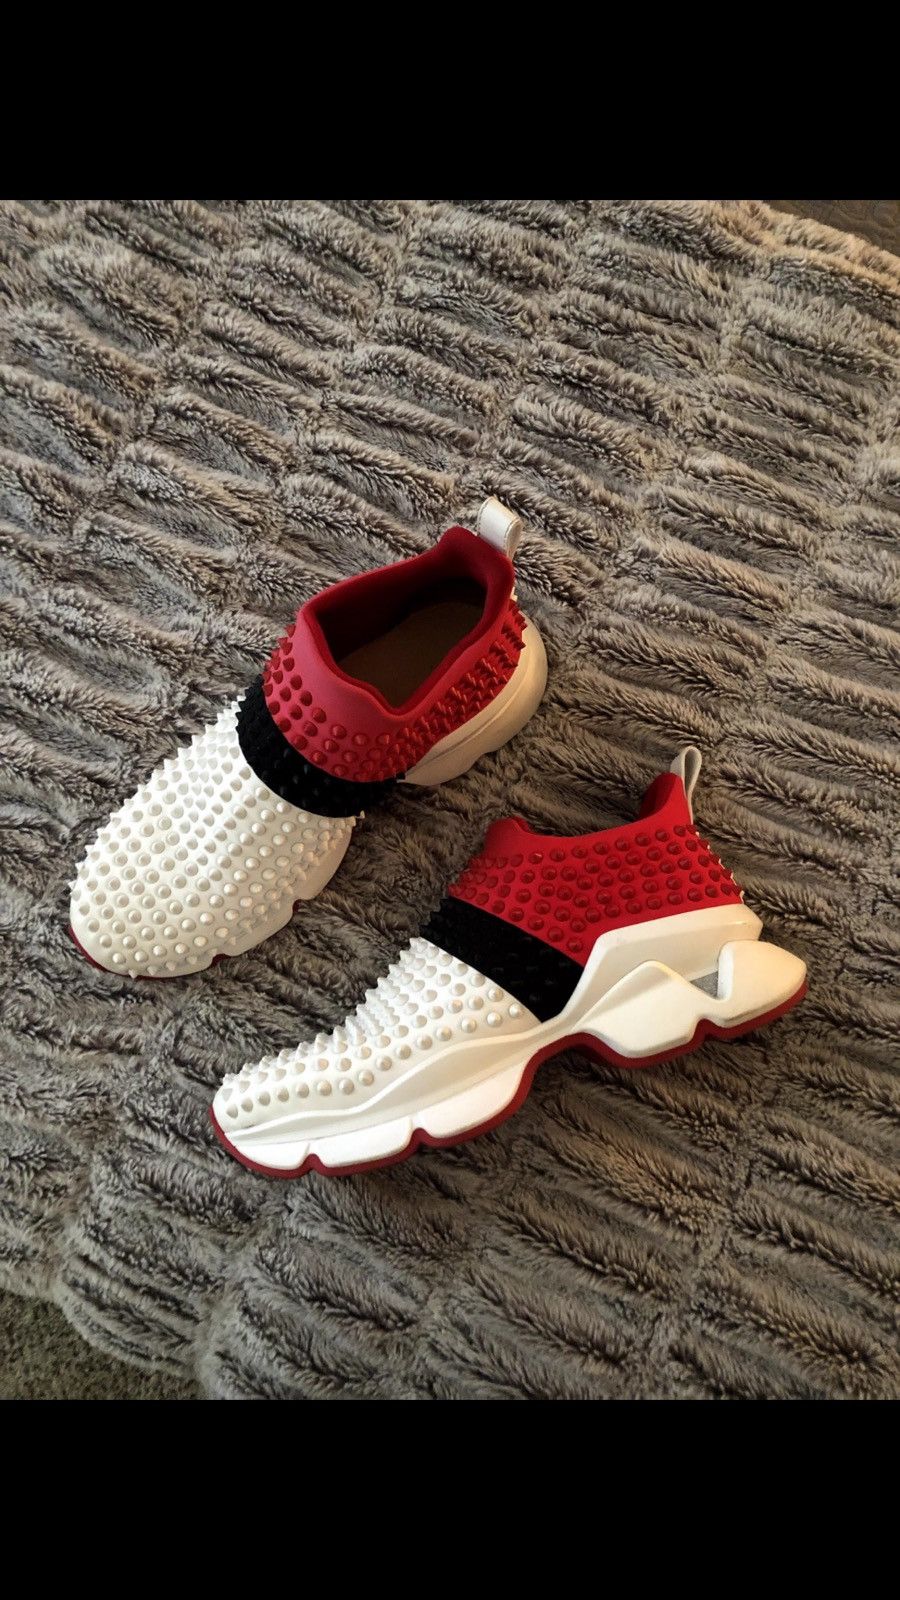 Christian Louboutin Christian Louboutin Tricolor Spike Sock Sneaker |  Grailed